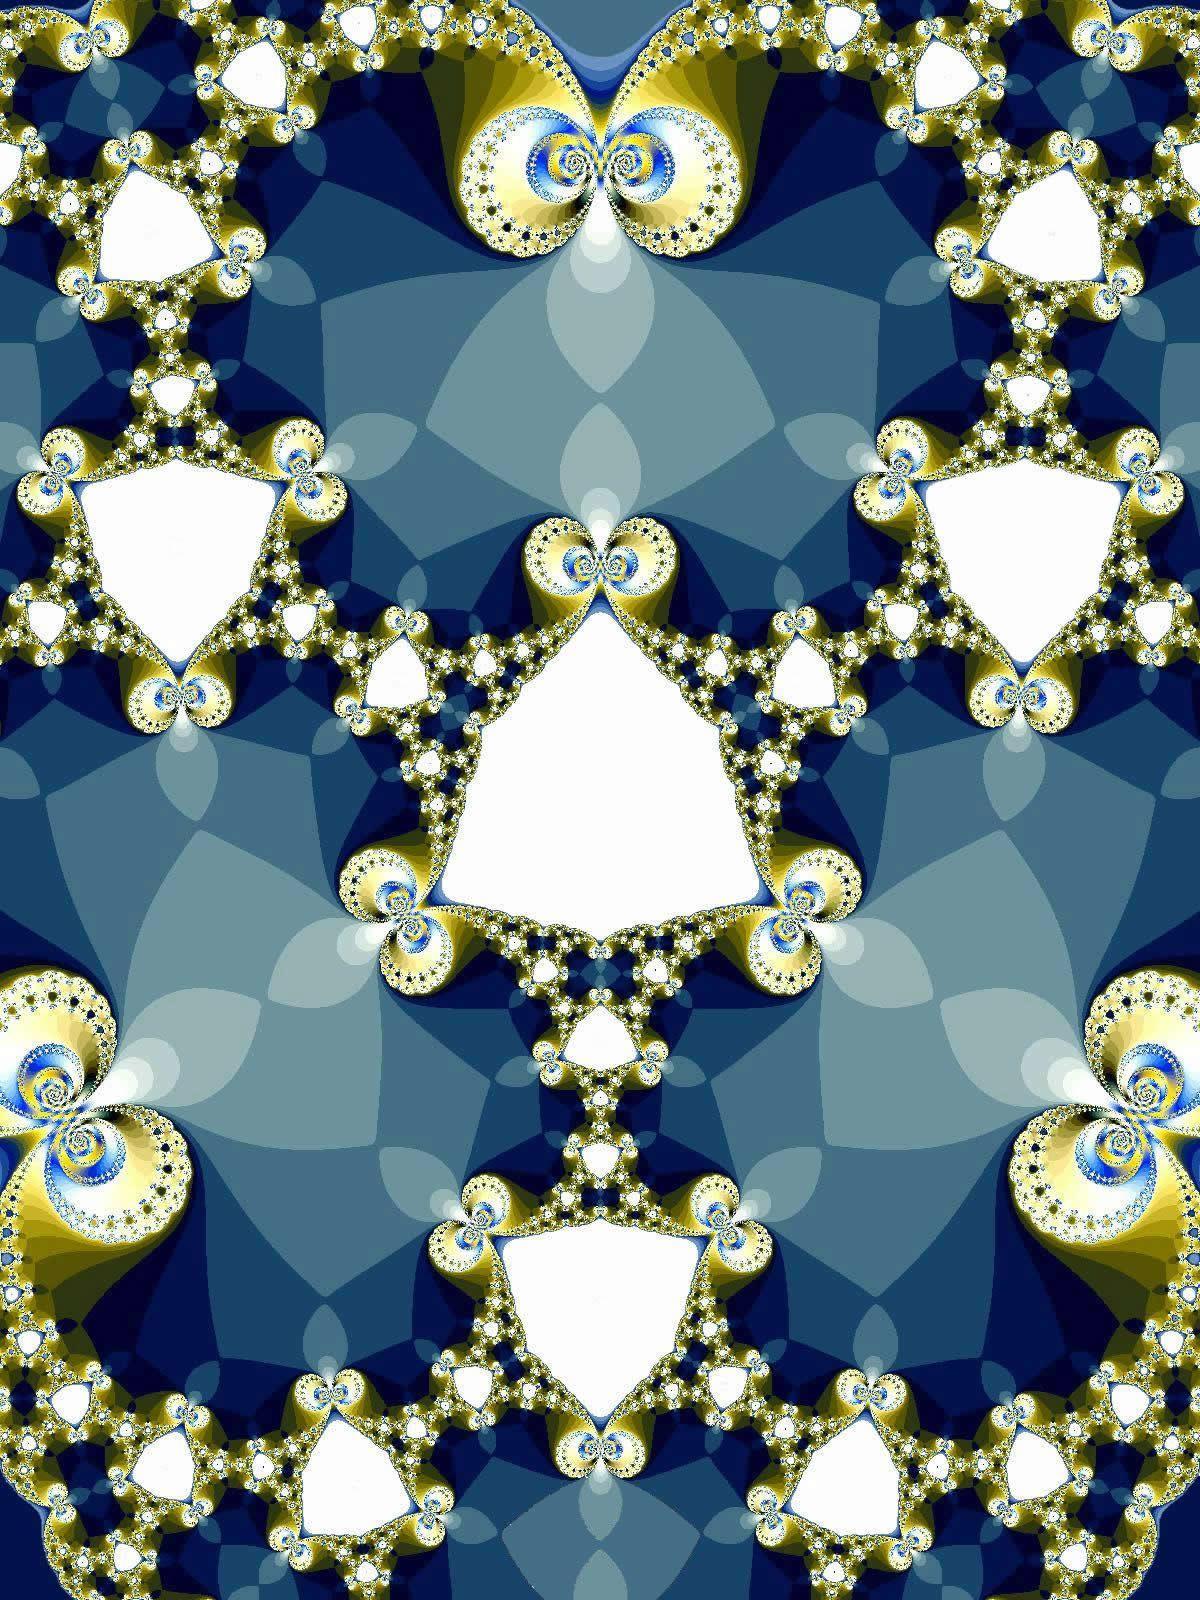 Image for entry 'Blue Julia'